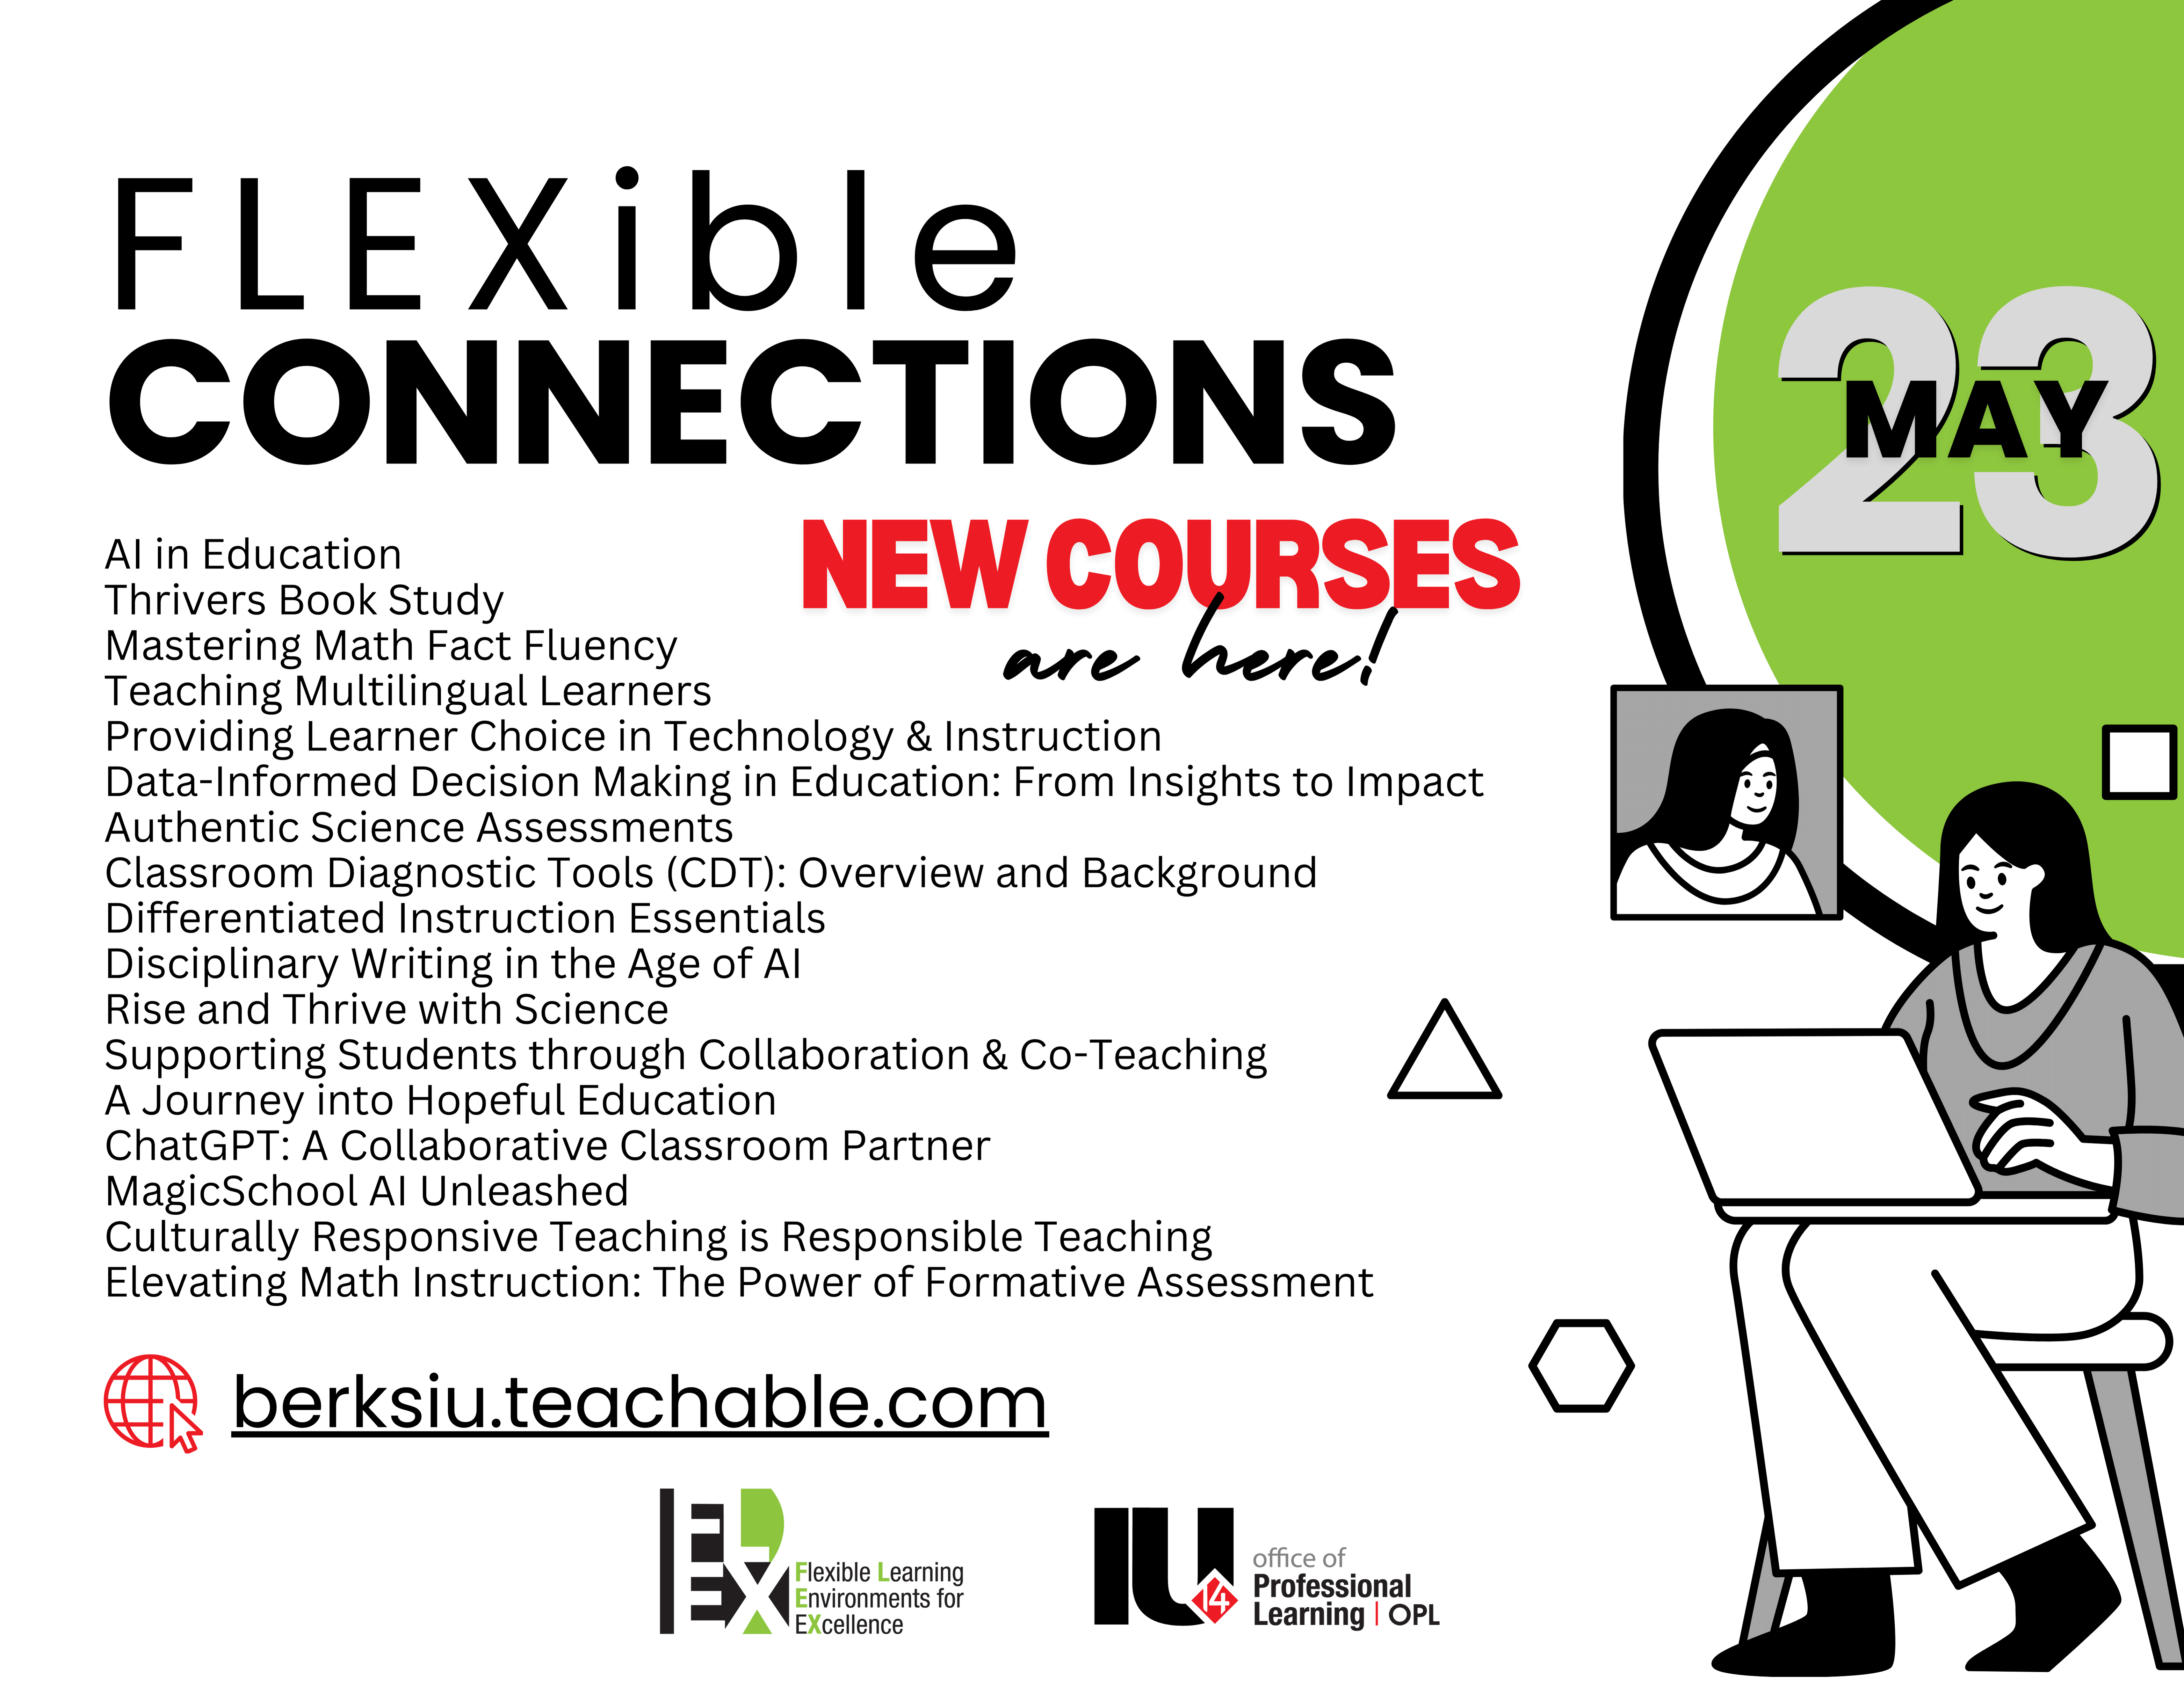 FLEXible Connections new courses announcement